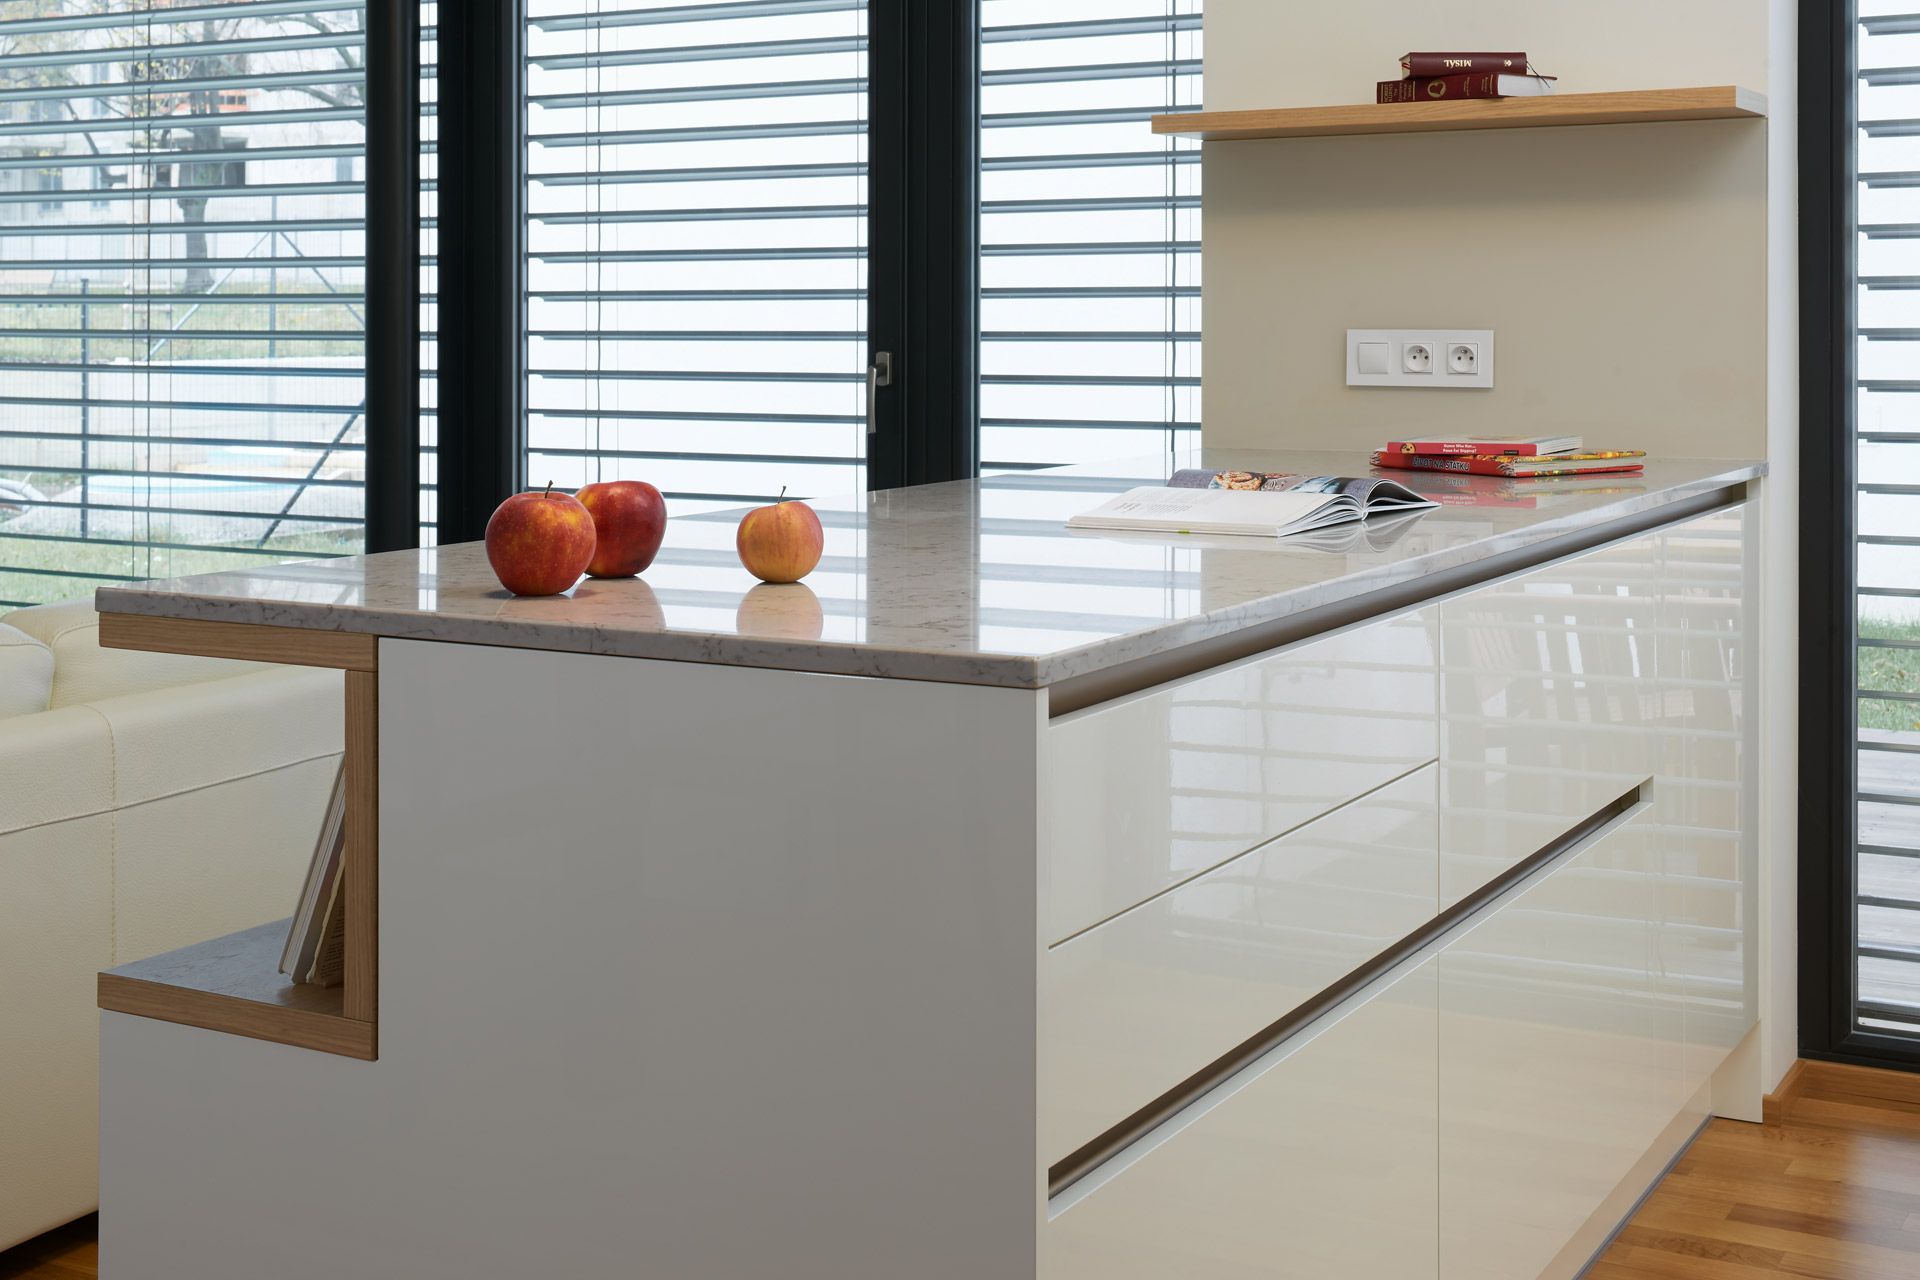 Hanák Furniture realization of white kitchen